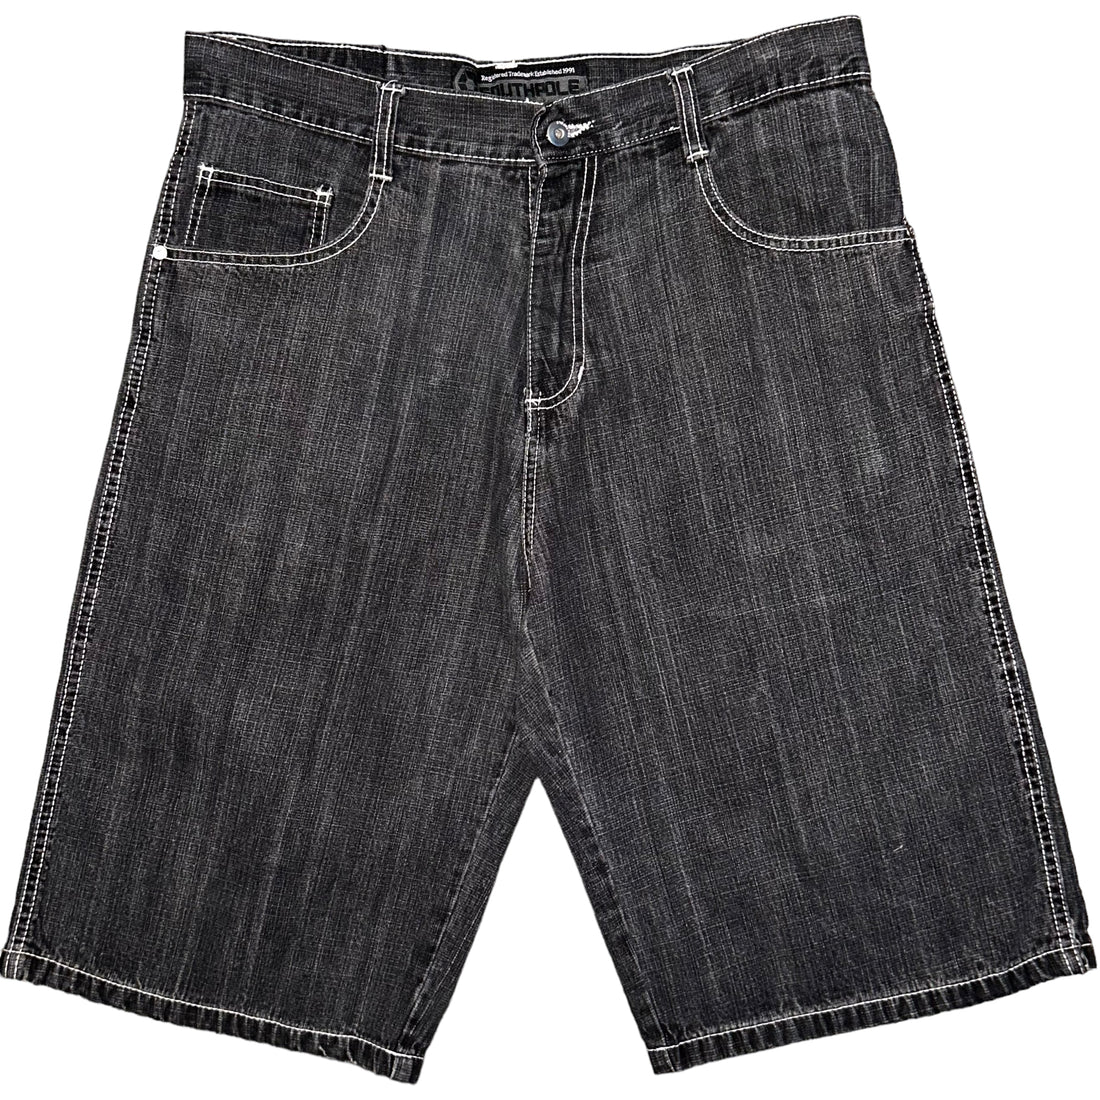 SOUTHPOLE Vintage Baggy Shorts (36 US XL)